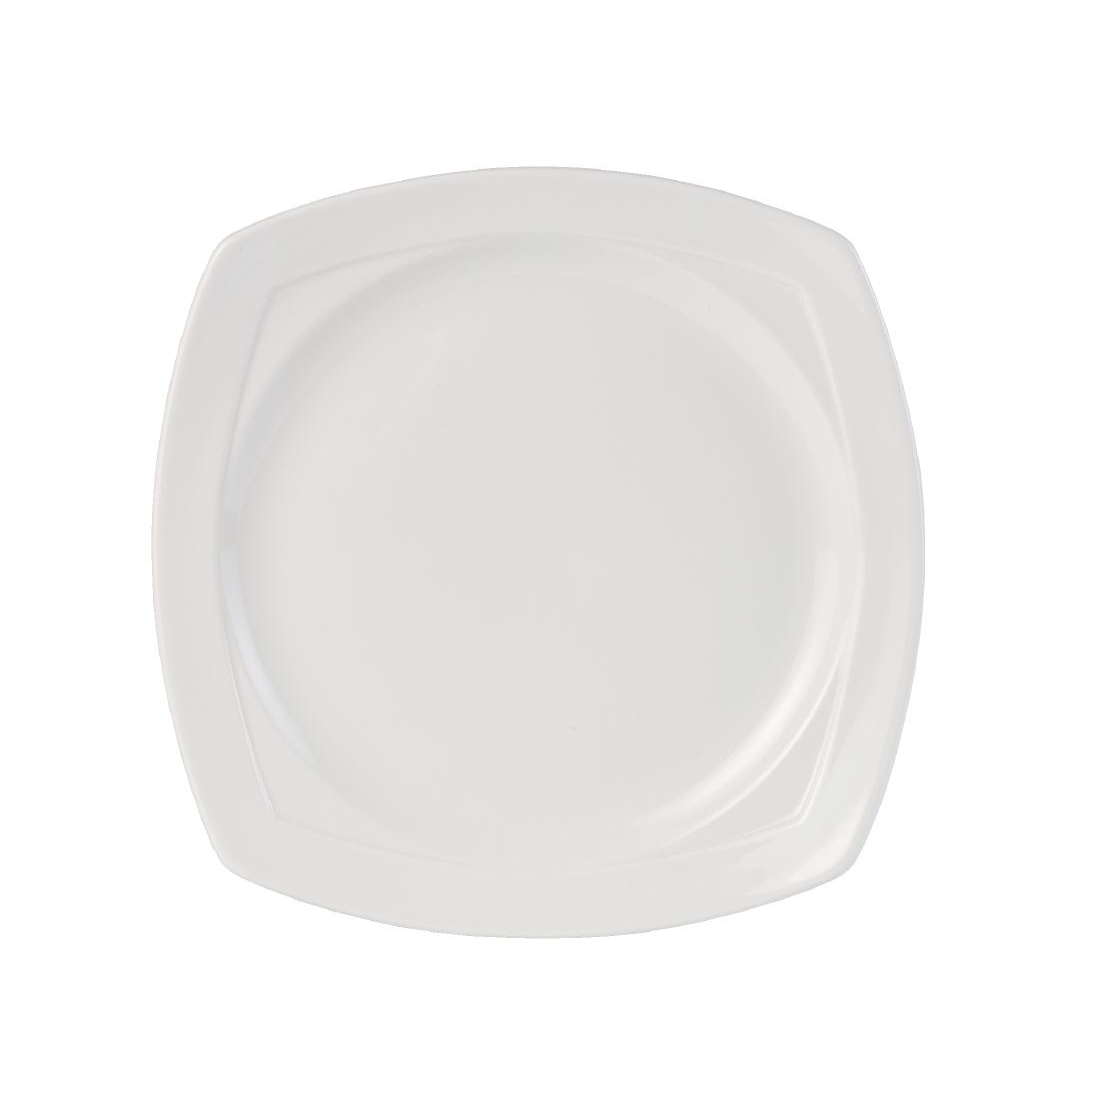 Steelite Simplicity White Harmony Square Plates 230mm